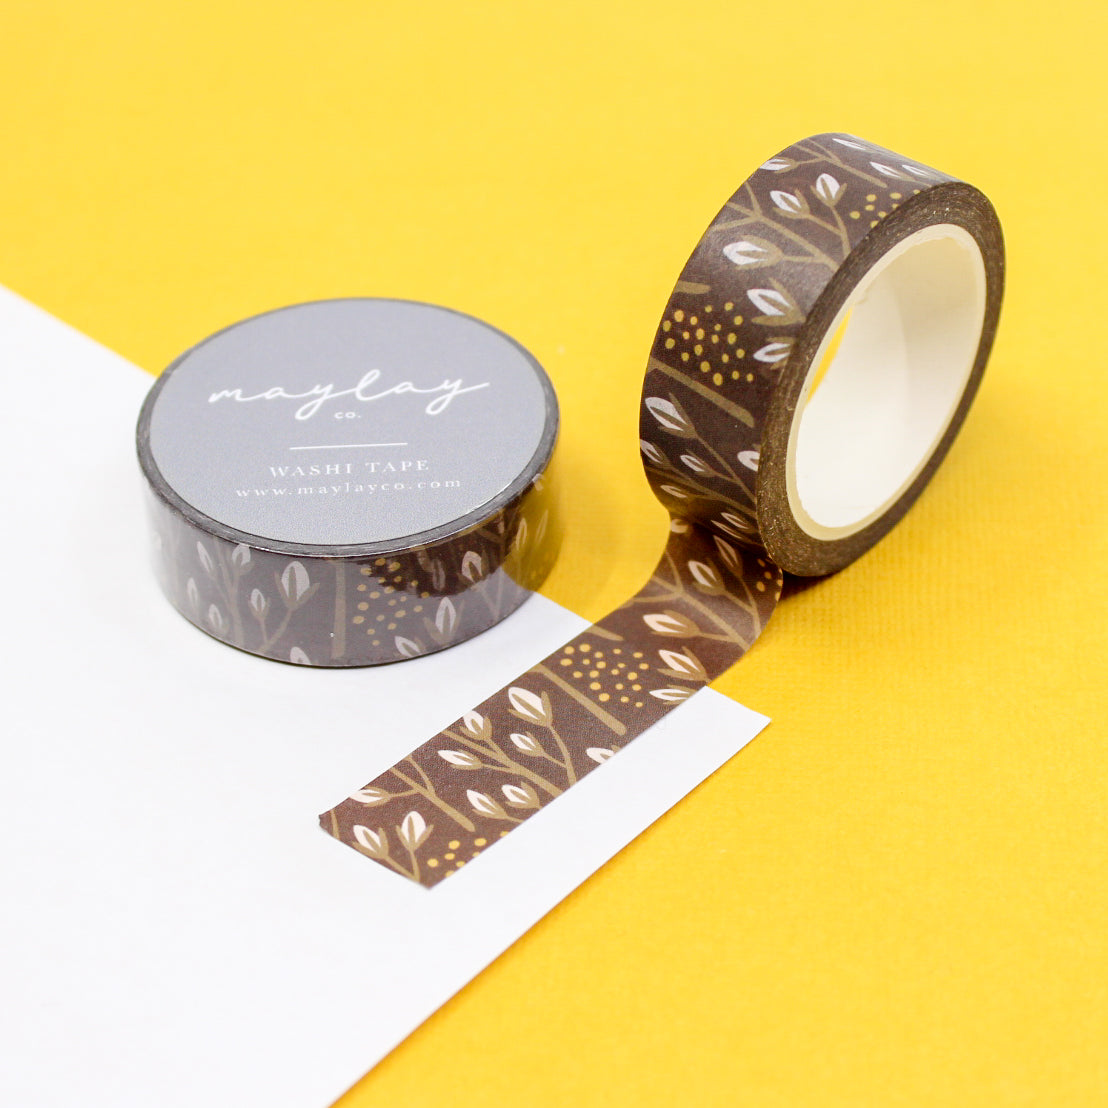 15mm*10m Japanese Kawaii DIY Scrapbooking Tools Gold Foil Washi Tape  Gold/Silver/Copper/Rose/Green Color Masking Tape